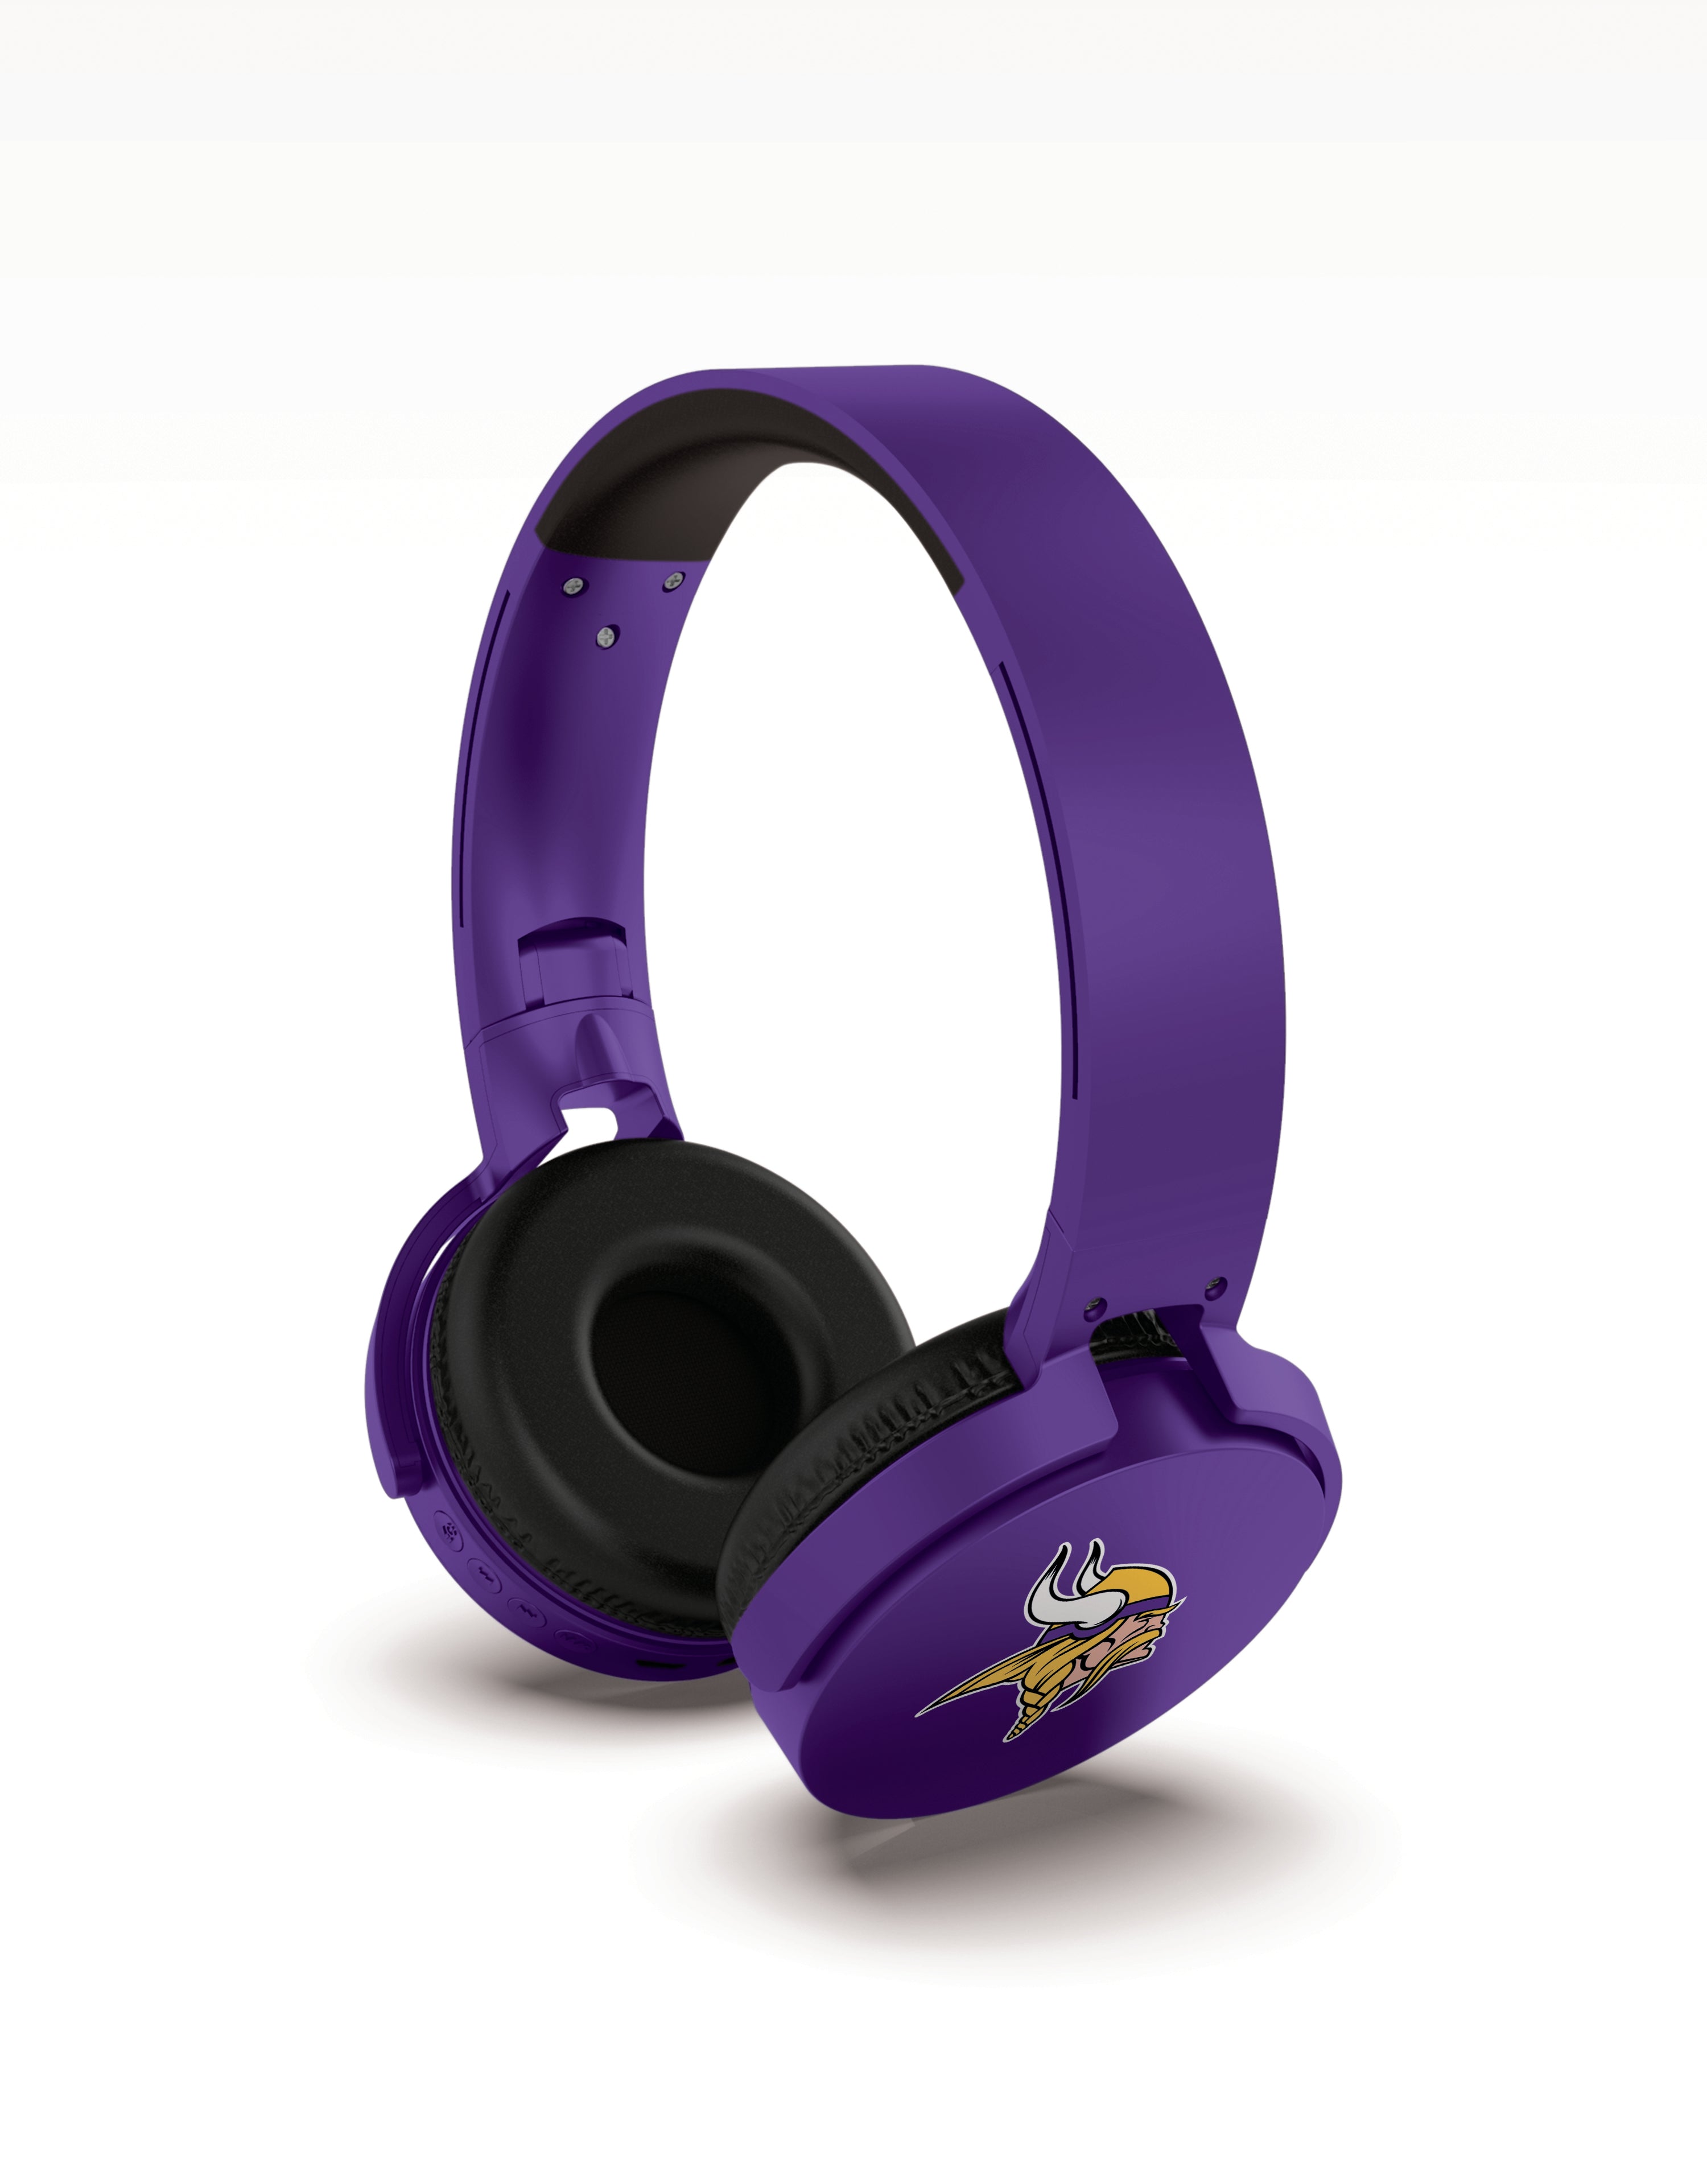 NFL Wireless Bluetooth Headphones